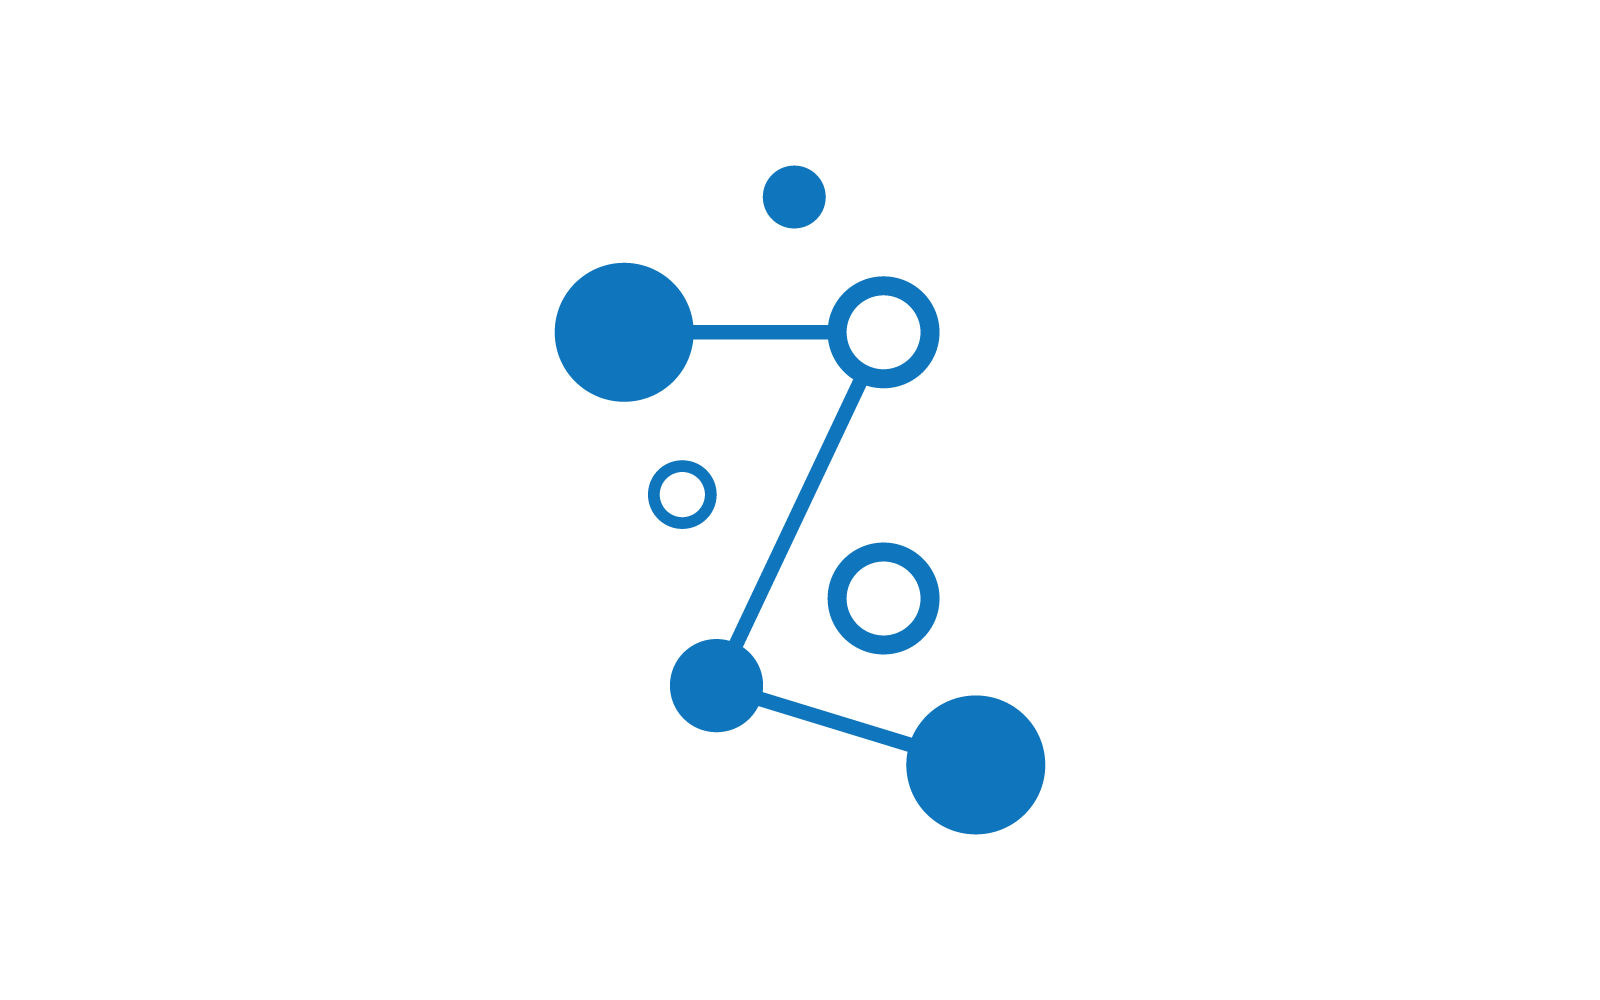 Molekula logo ilustrace design vektorové šablony